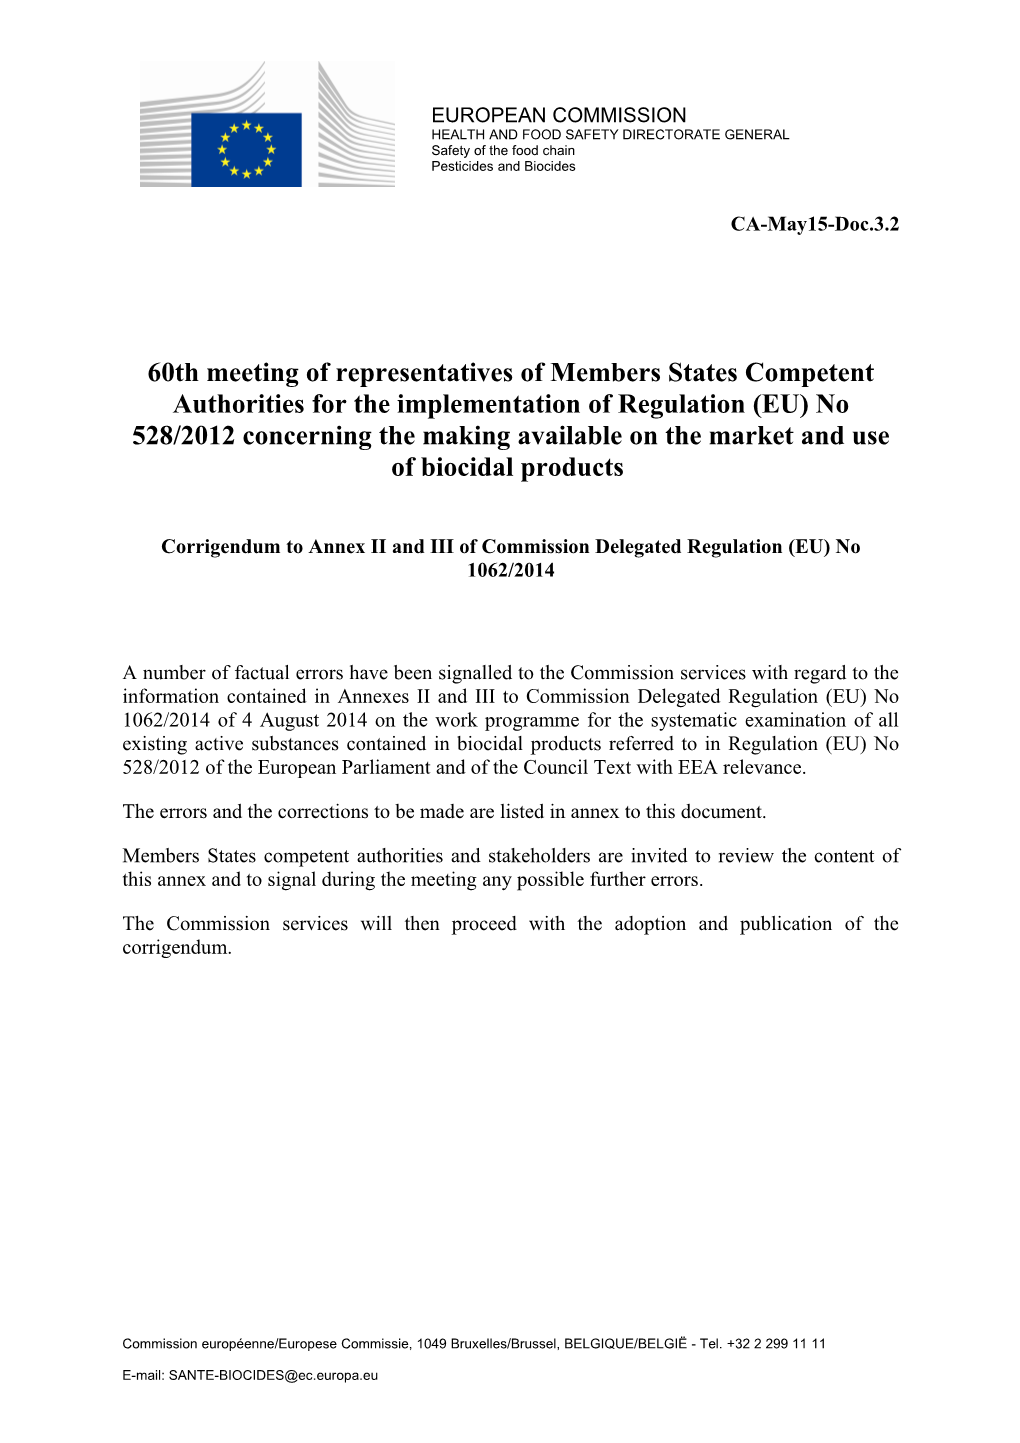 Corrigendum to Annex II and III of Commission Delegated Regulation (EU) No 1062/2014